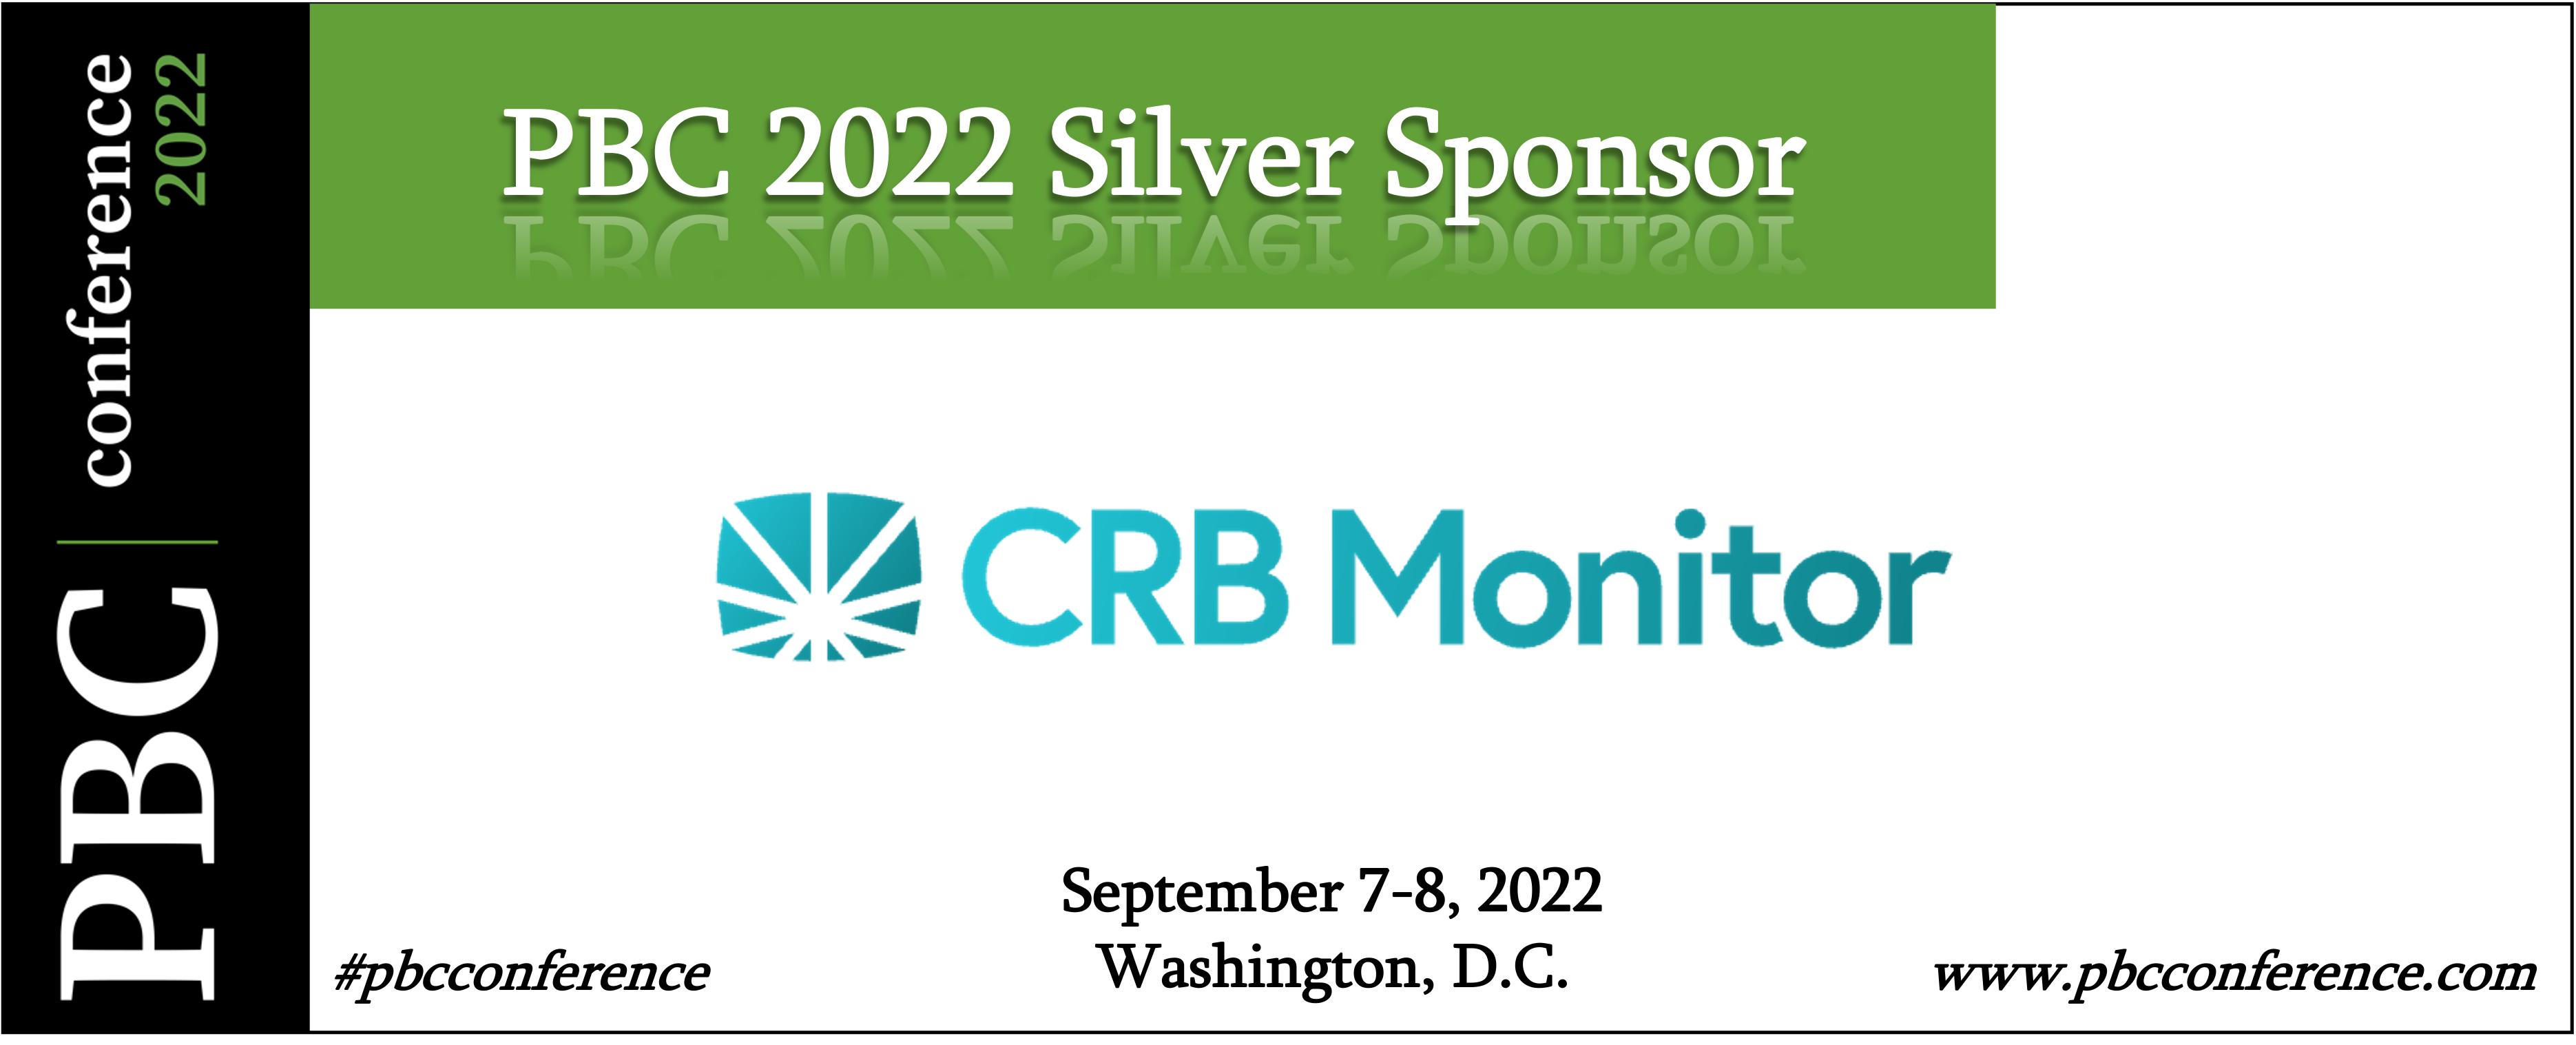 PBC 2022 Sponsor Banner - CRB Monitor rectangle